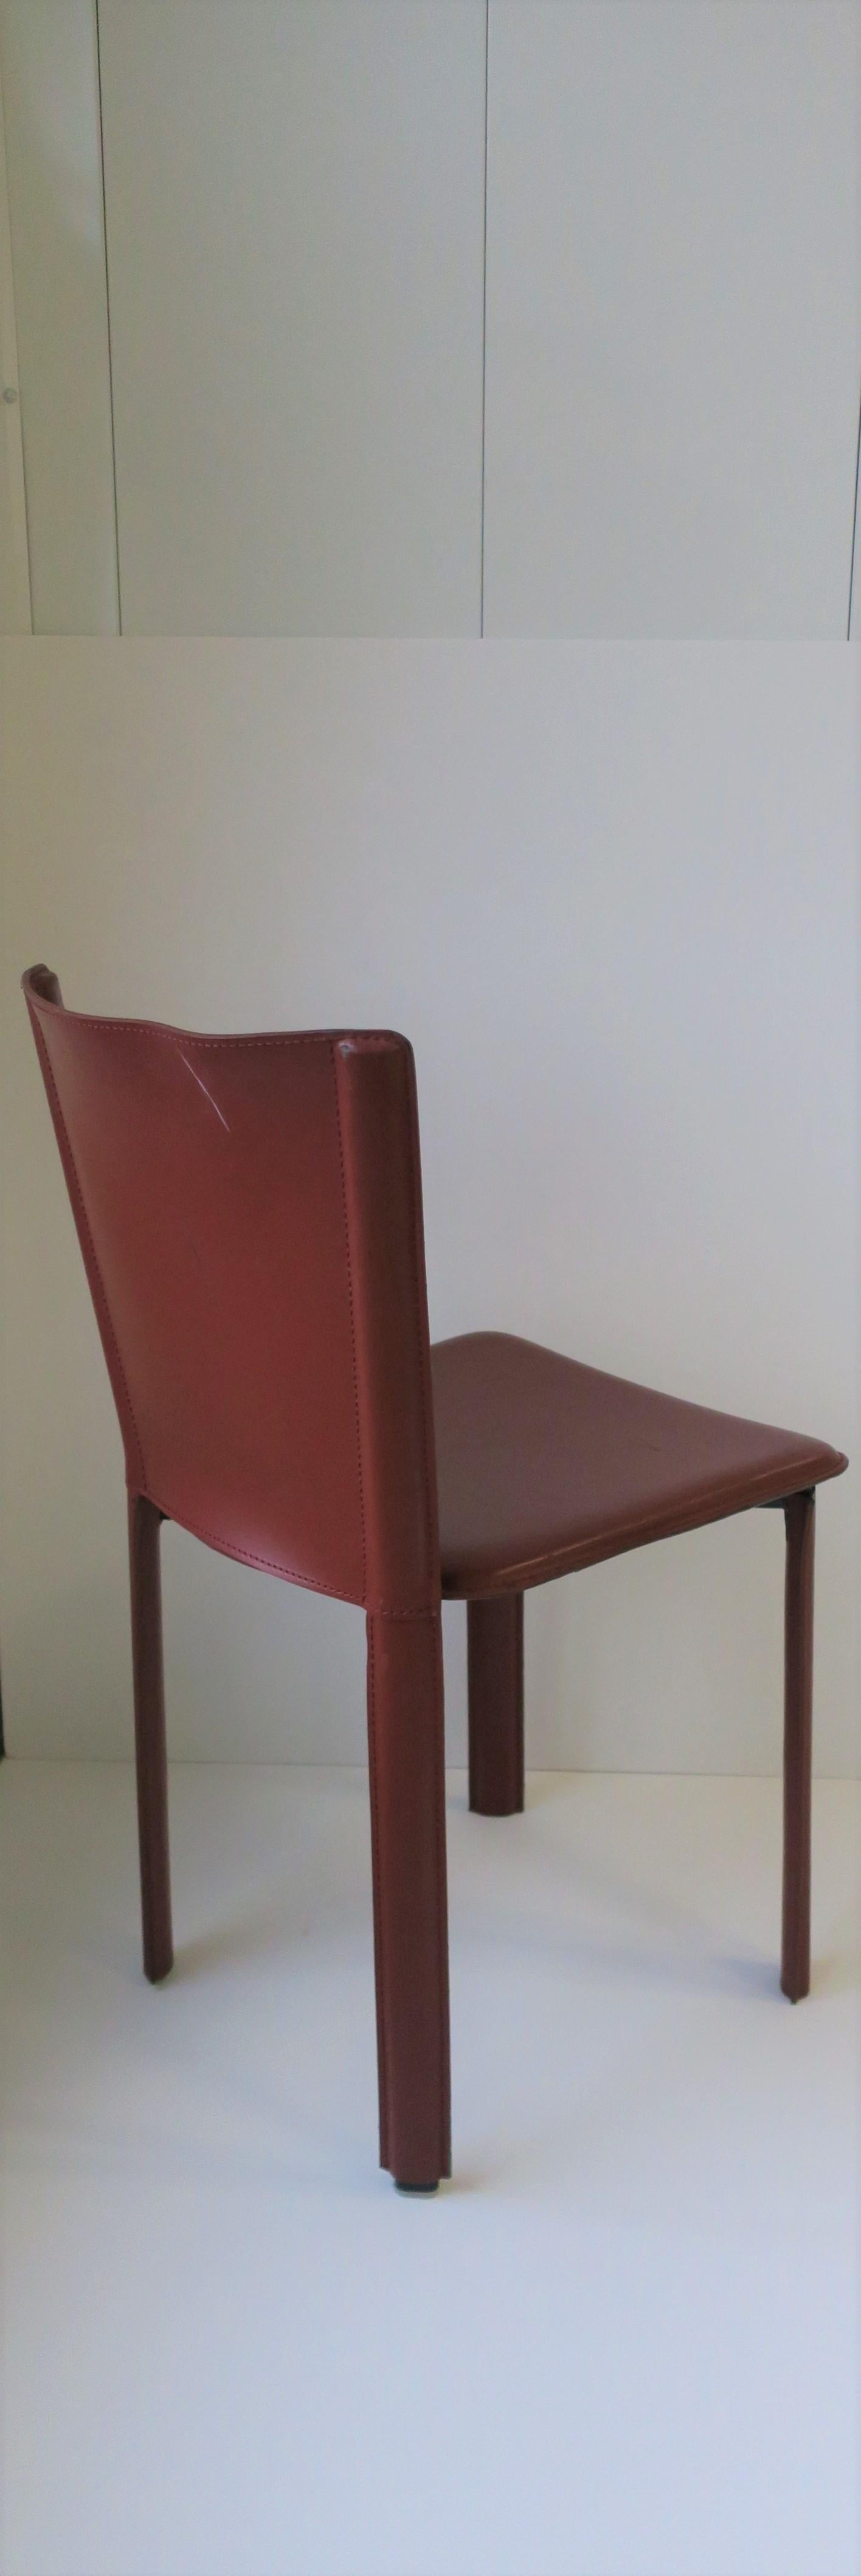 Metal Designer Italian Red Burgundy Leather Side or Desk Chair by Frag